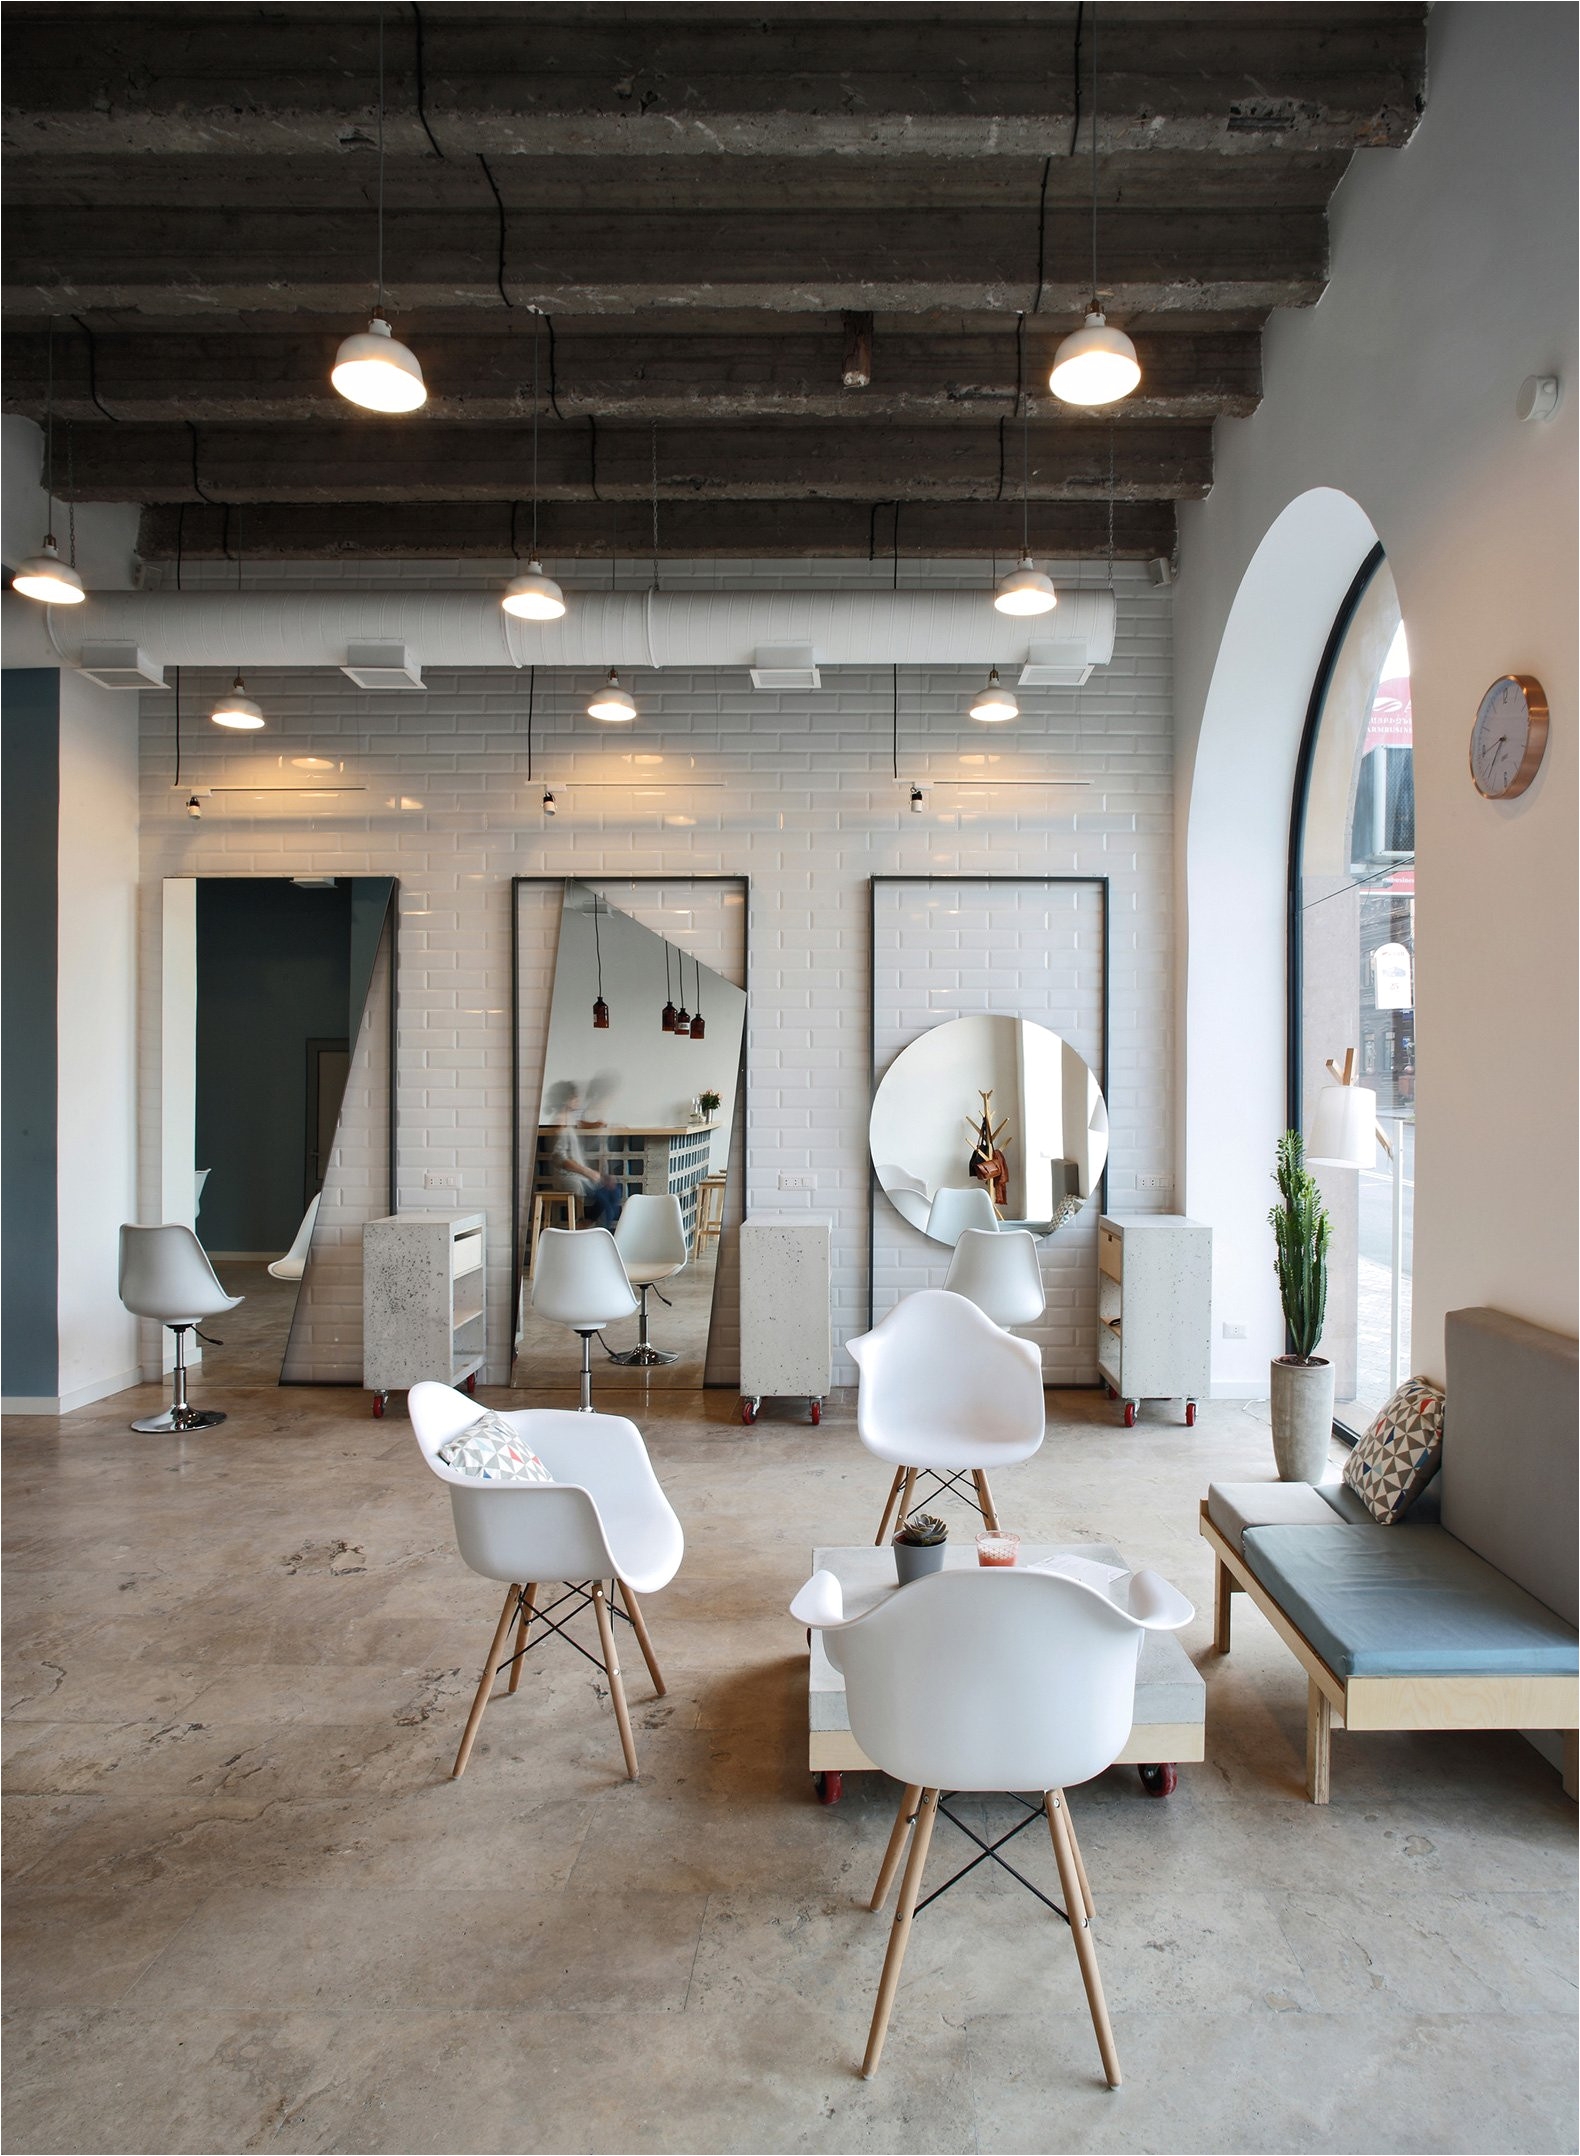 interior design schools buffalo ny elegant od blow dry bar by snkh architectural studio of mezmerizing